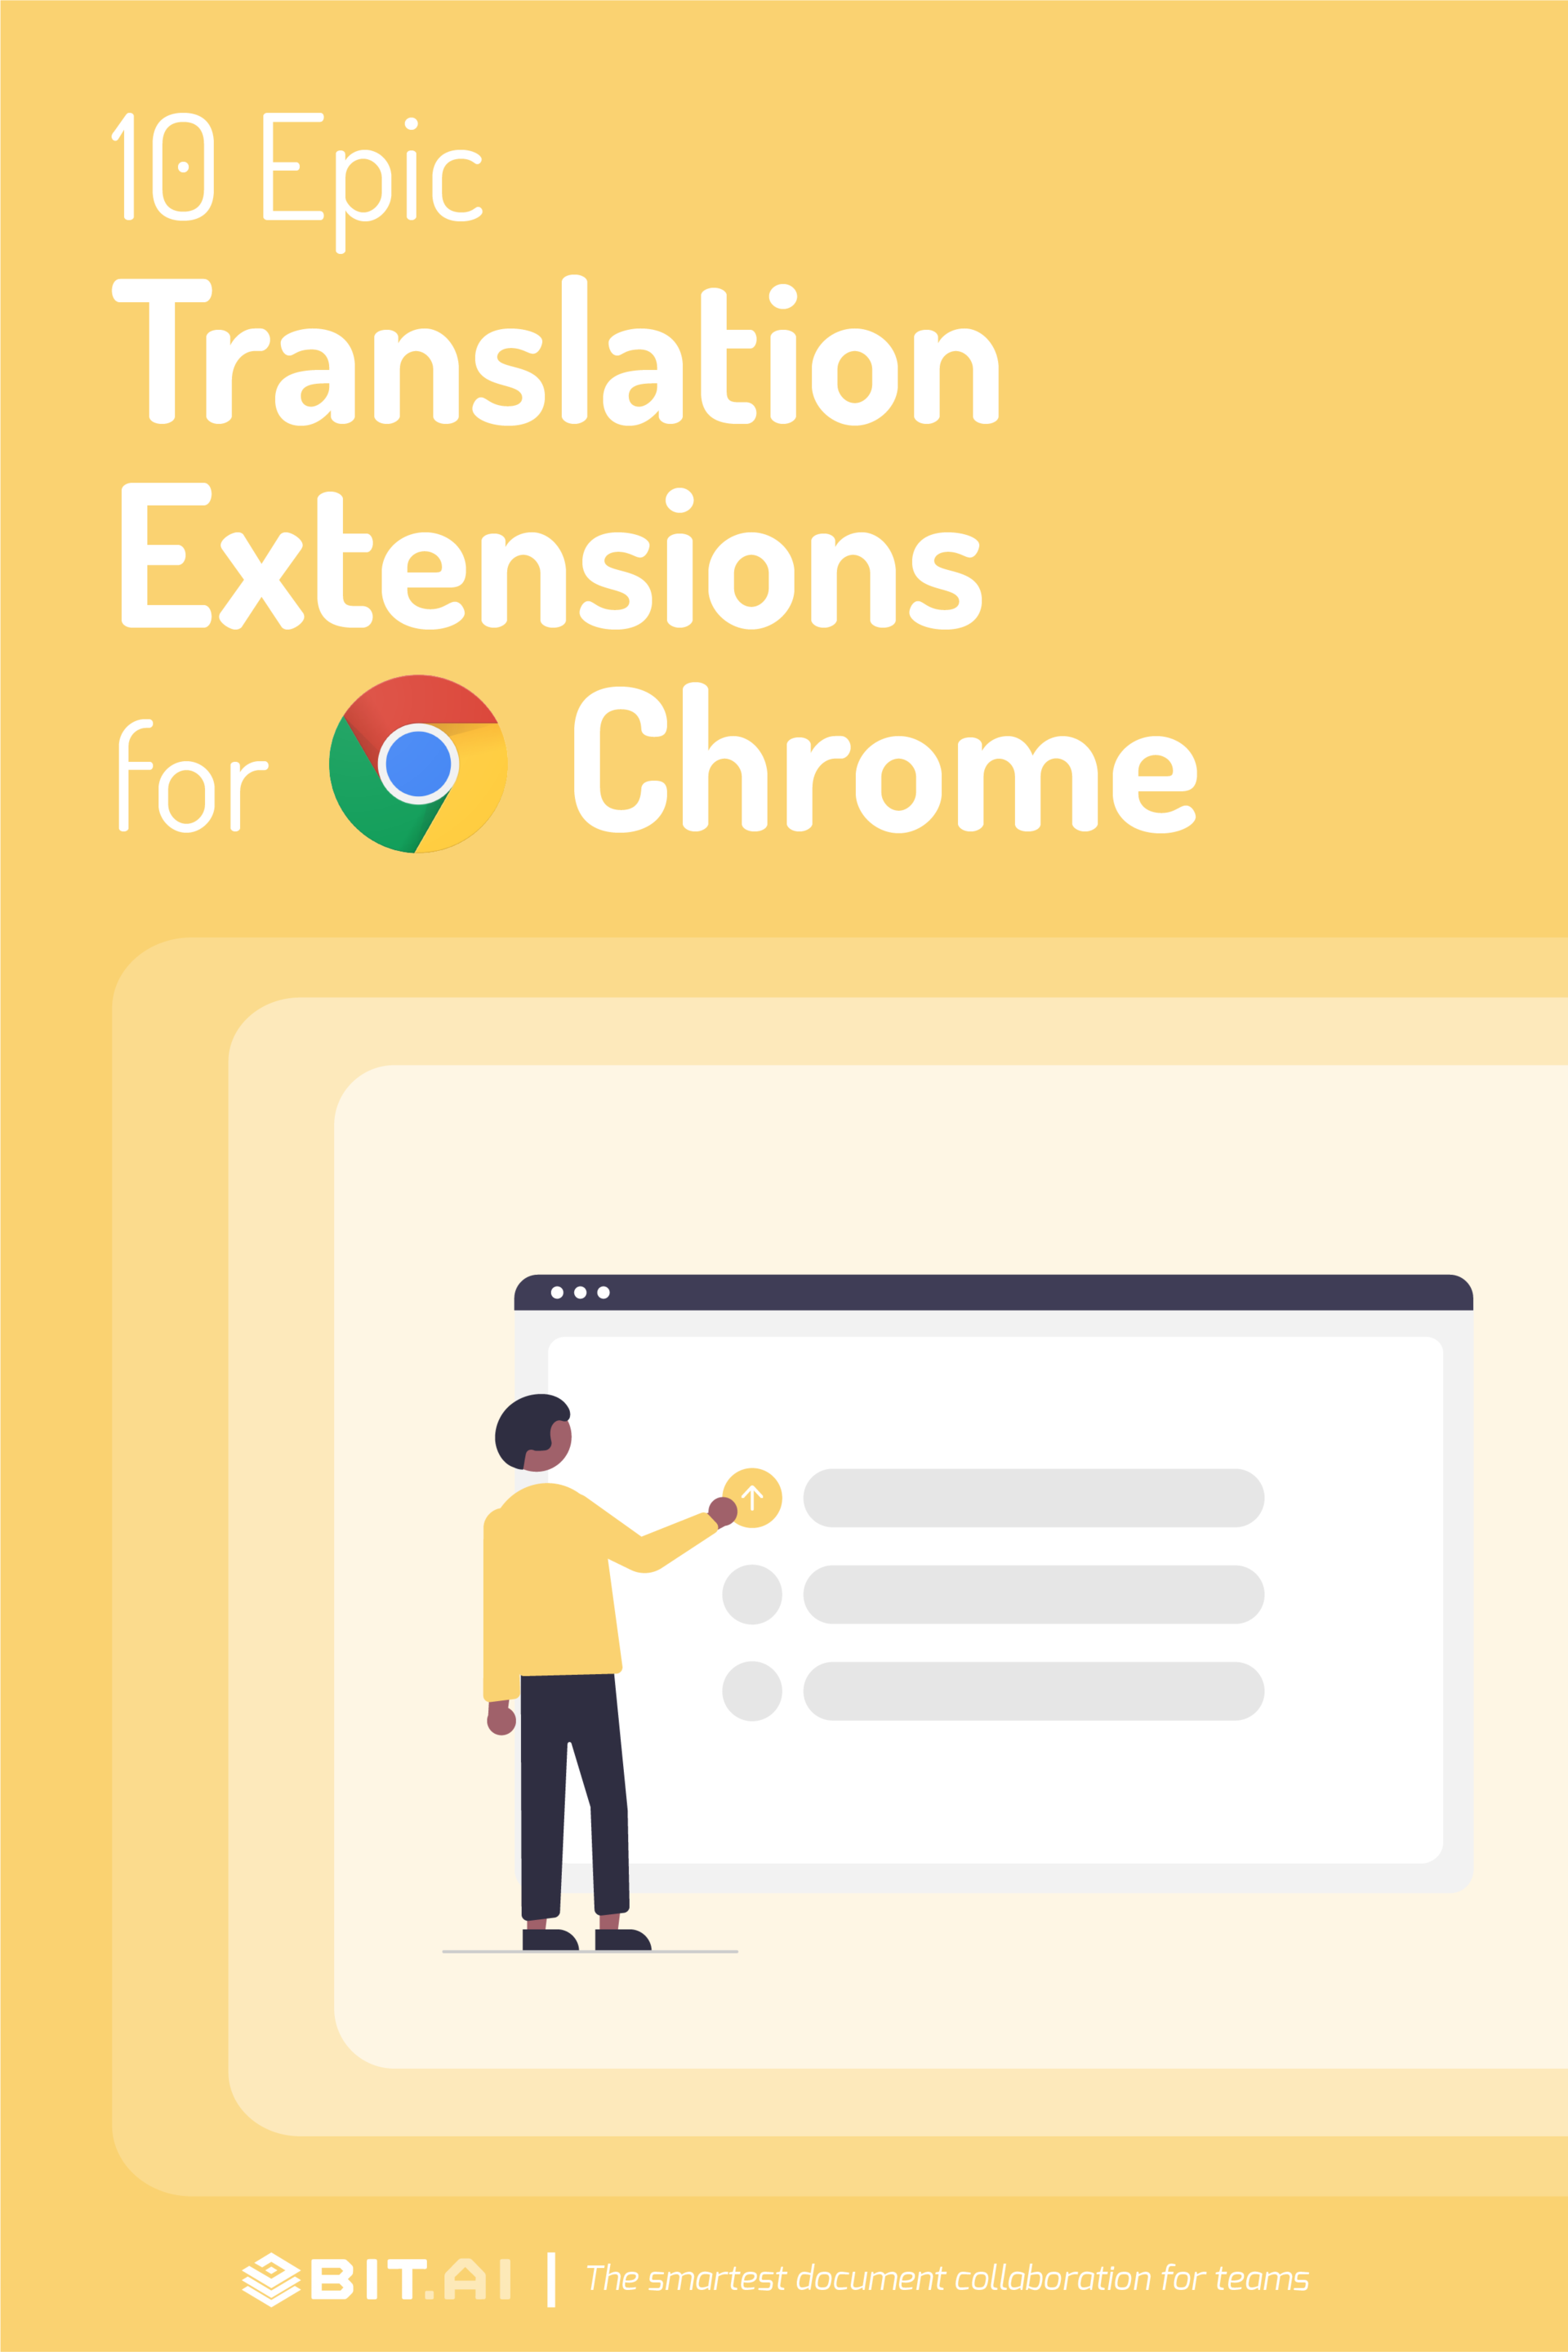 Translation extensions for chrome - Pinterest